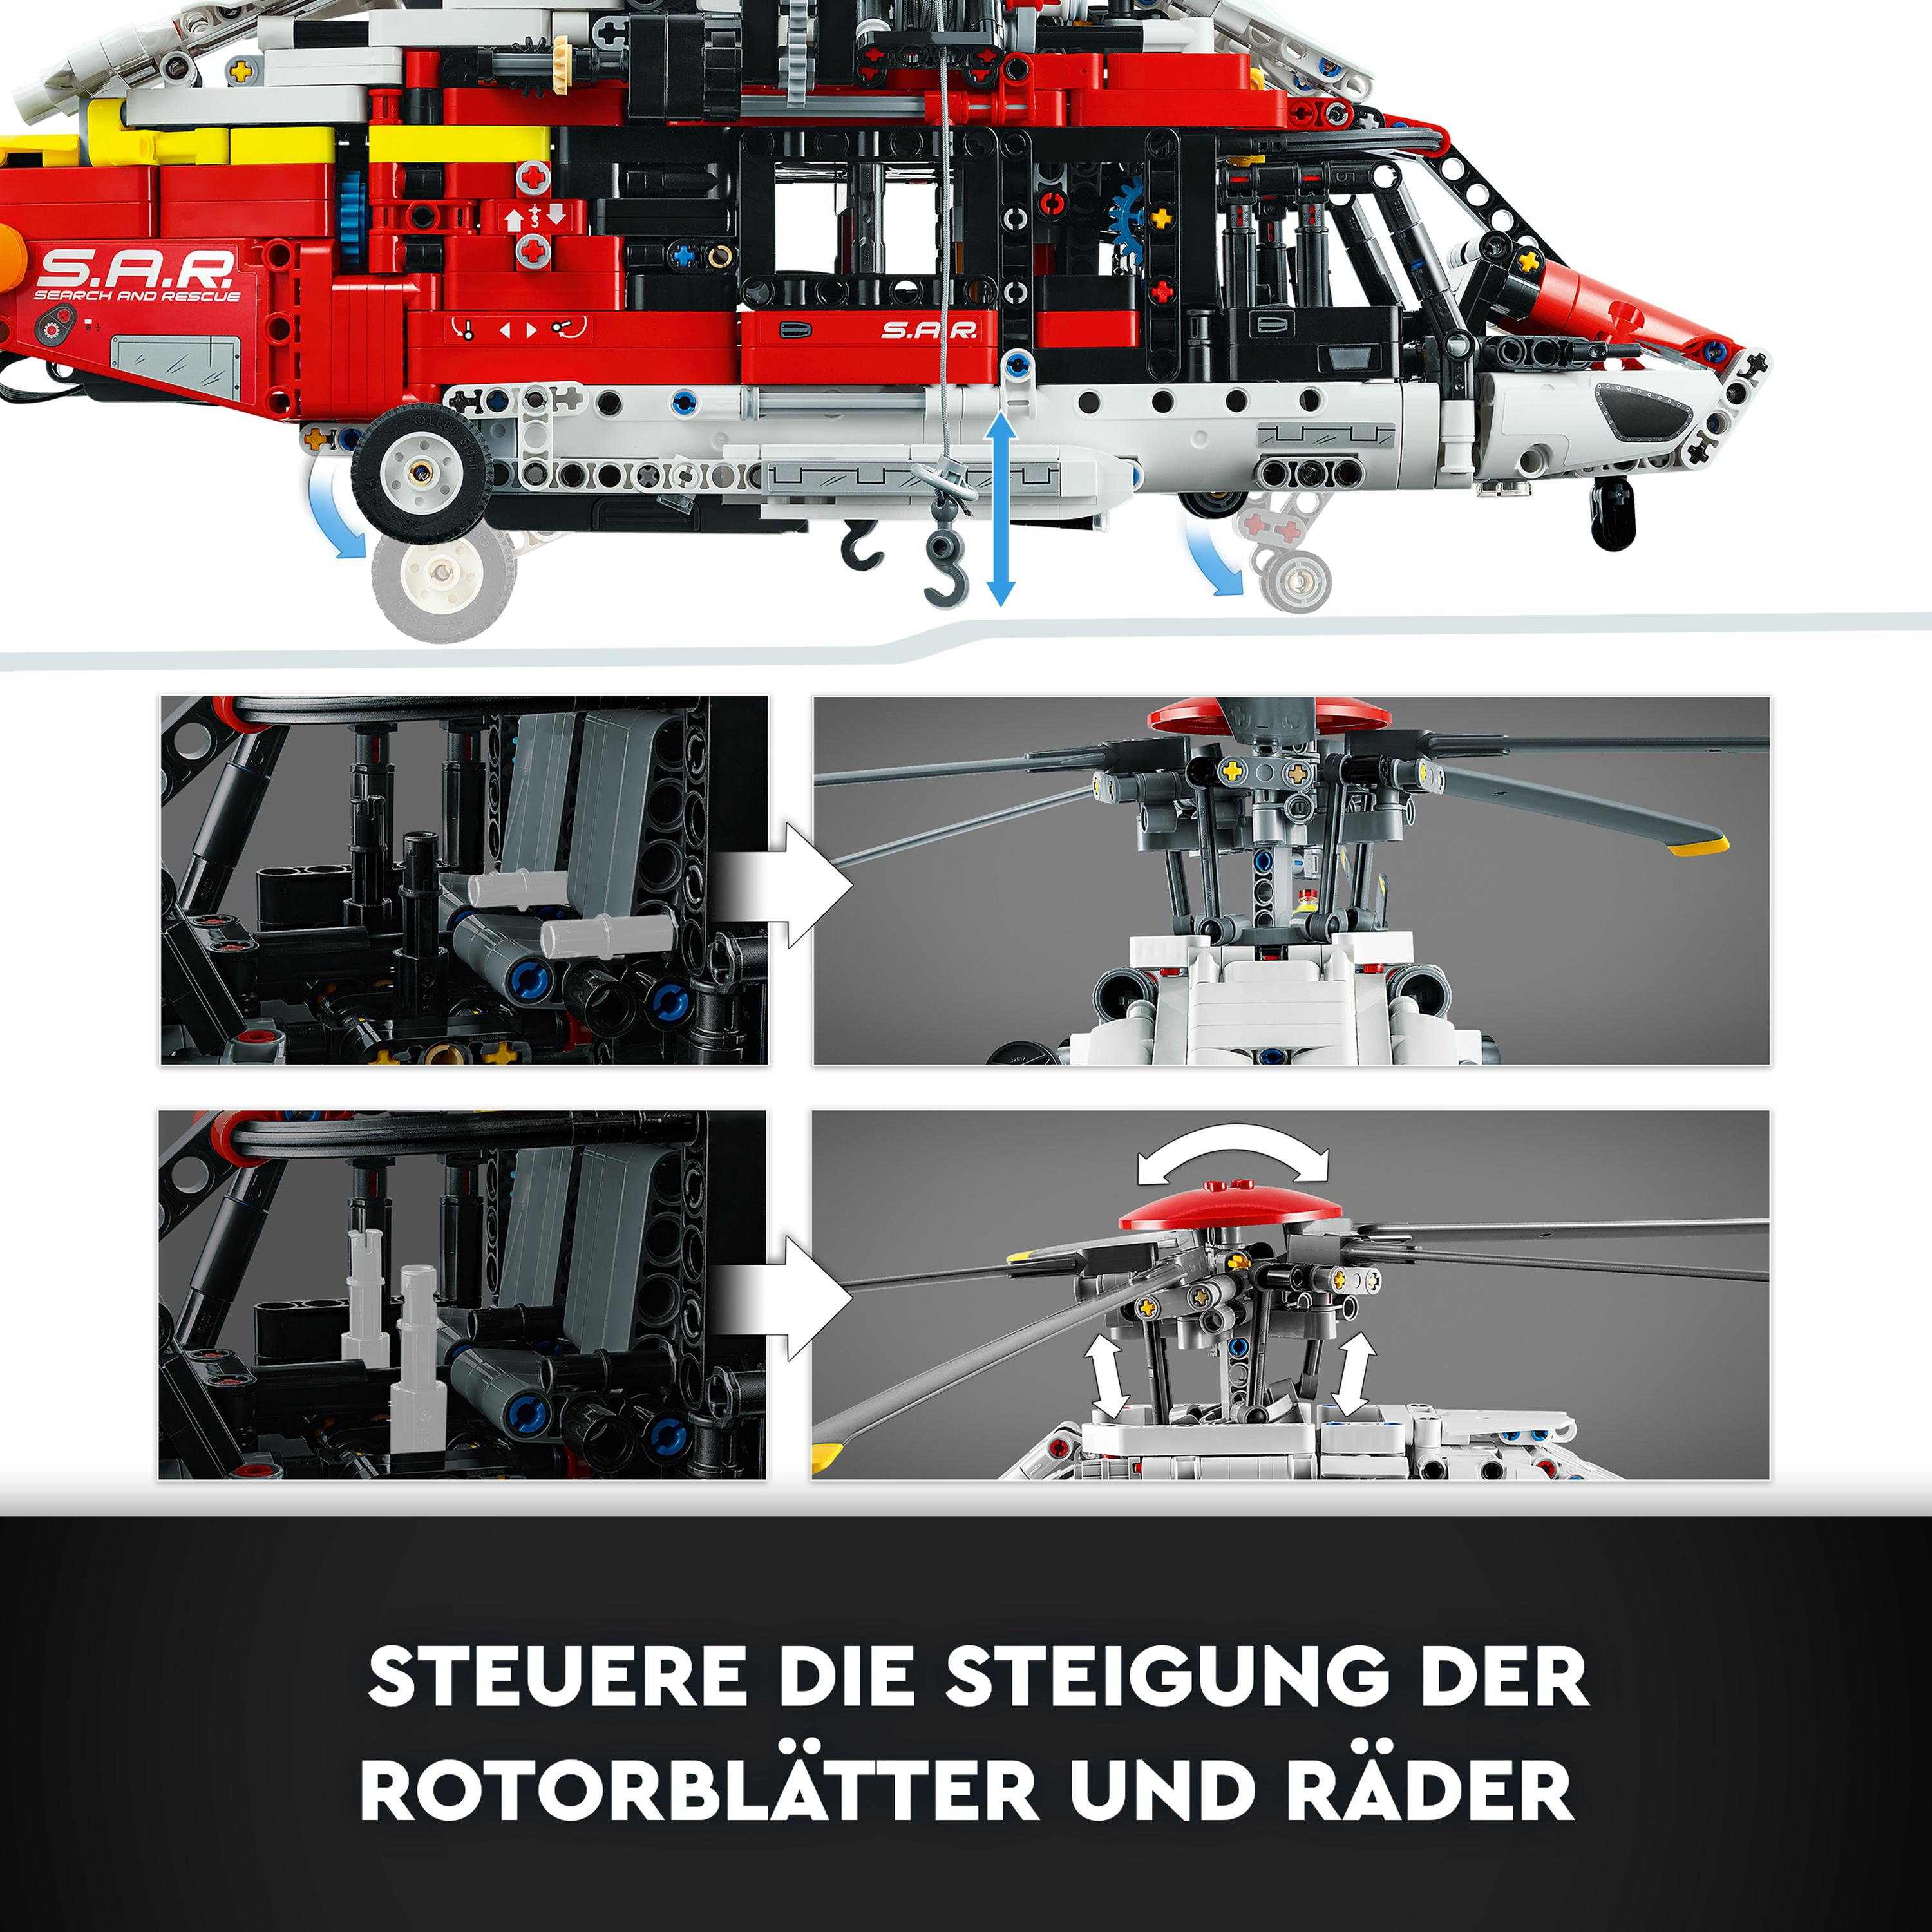 Bausatz, Technic H175 Airbus LEGO Mehrfarbig Rettungshubschrauber 42145